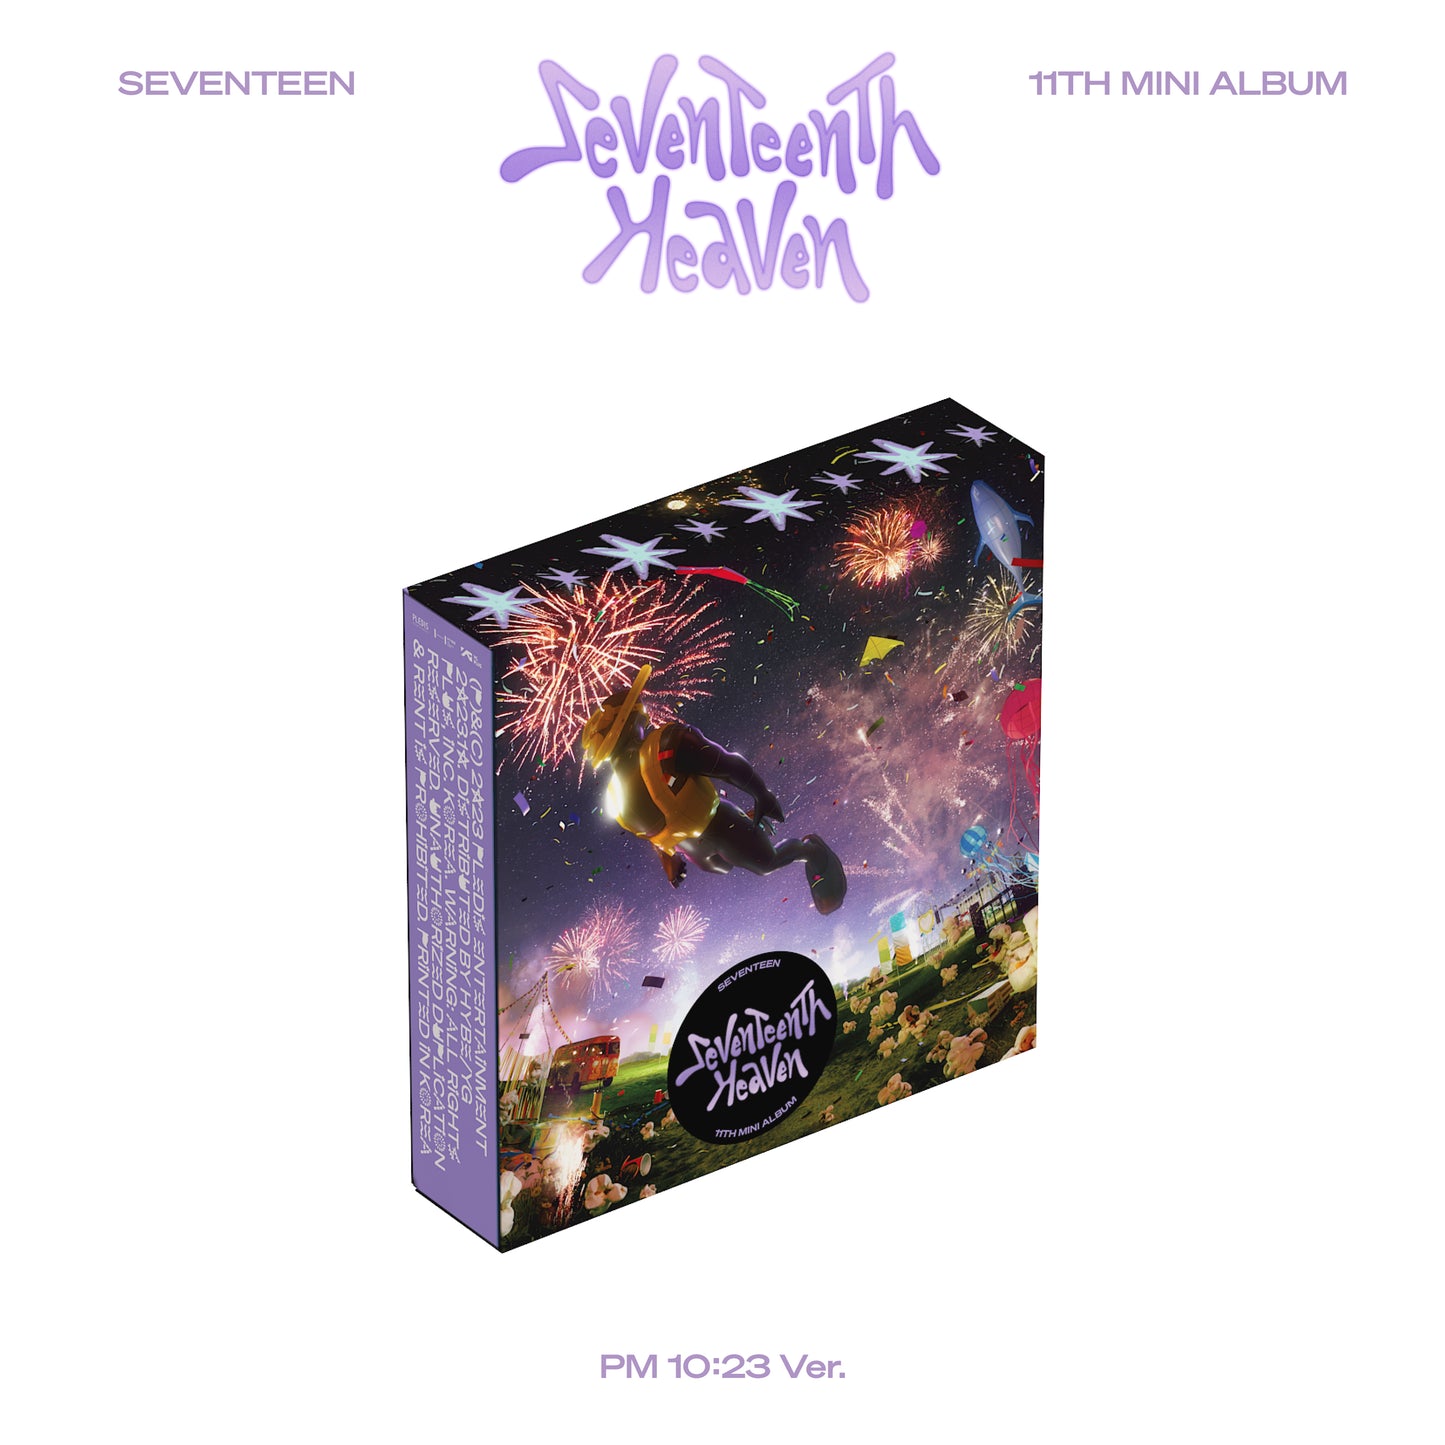 Seventeen (K-Pop) - Seventeen 11th Mini Album Seventeenth Heaven